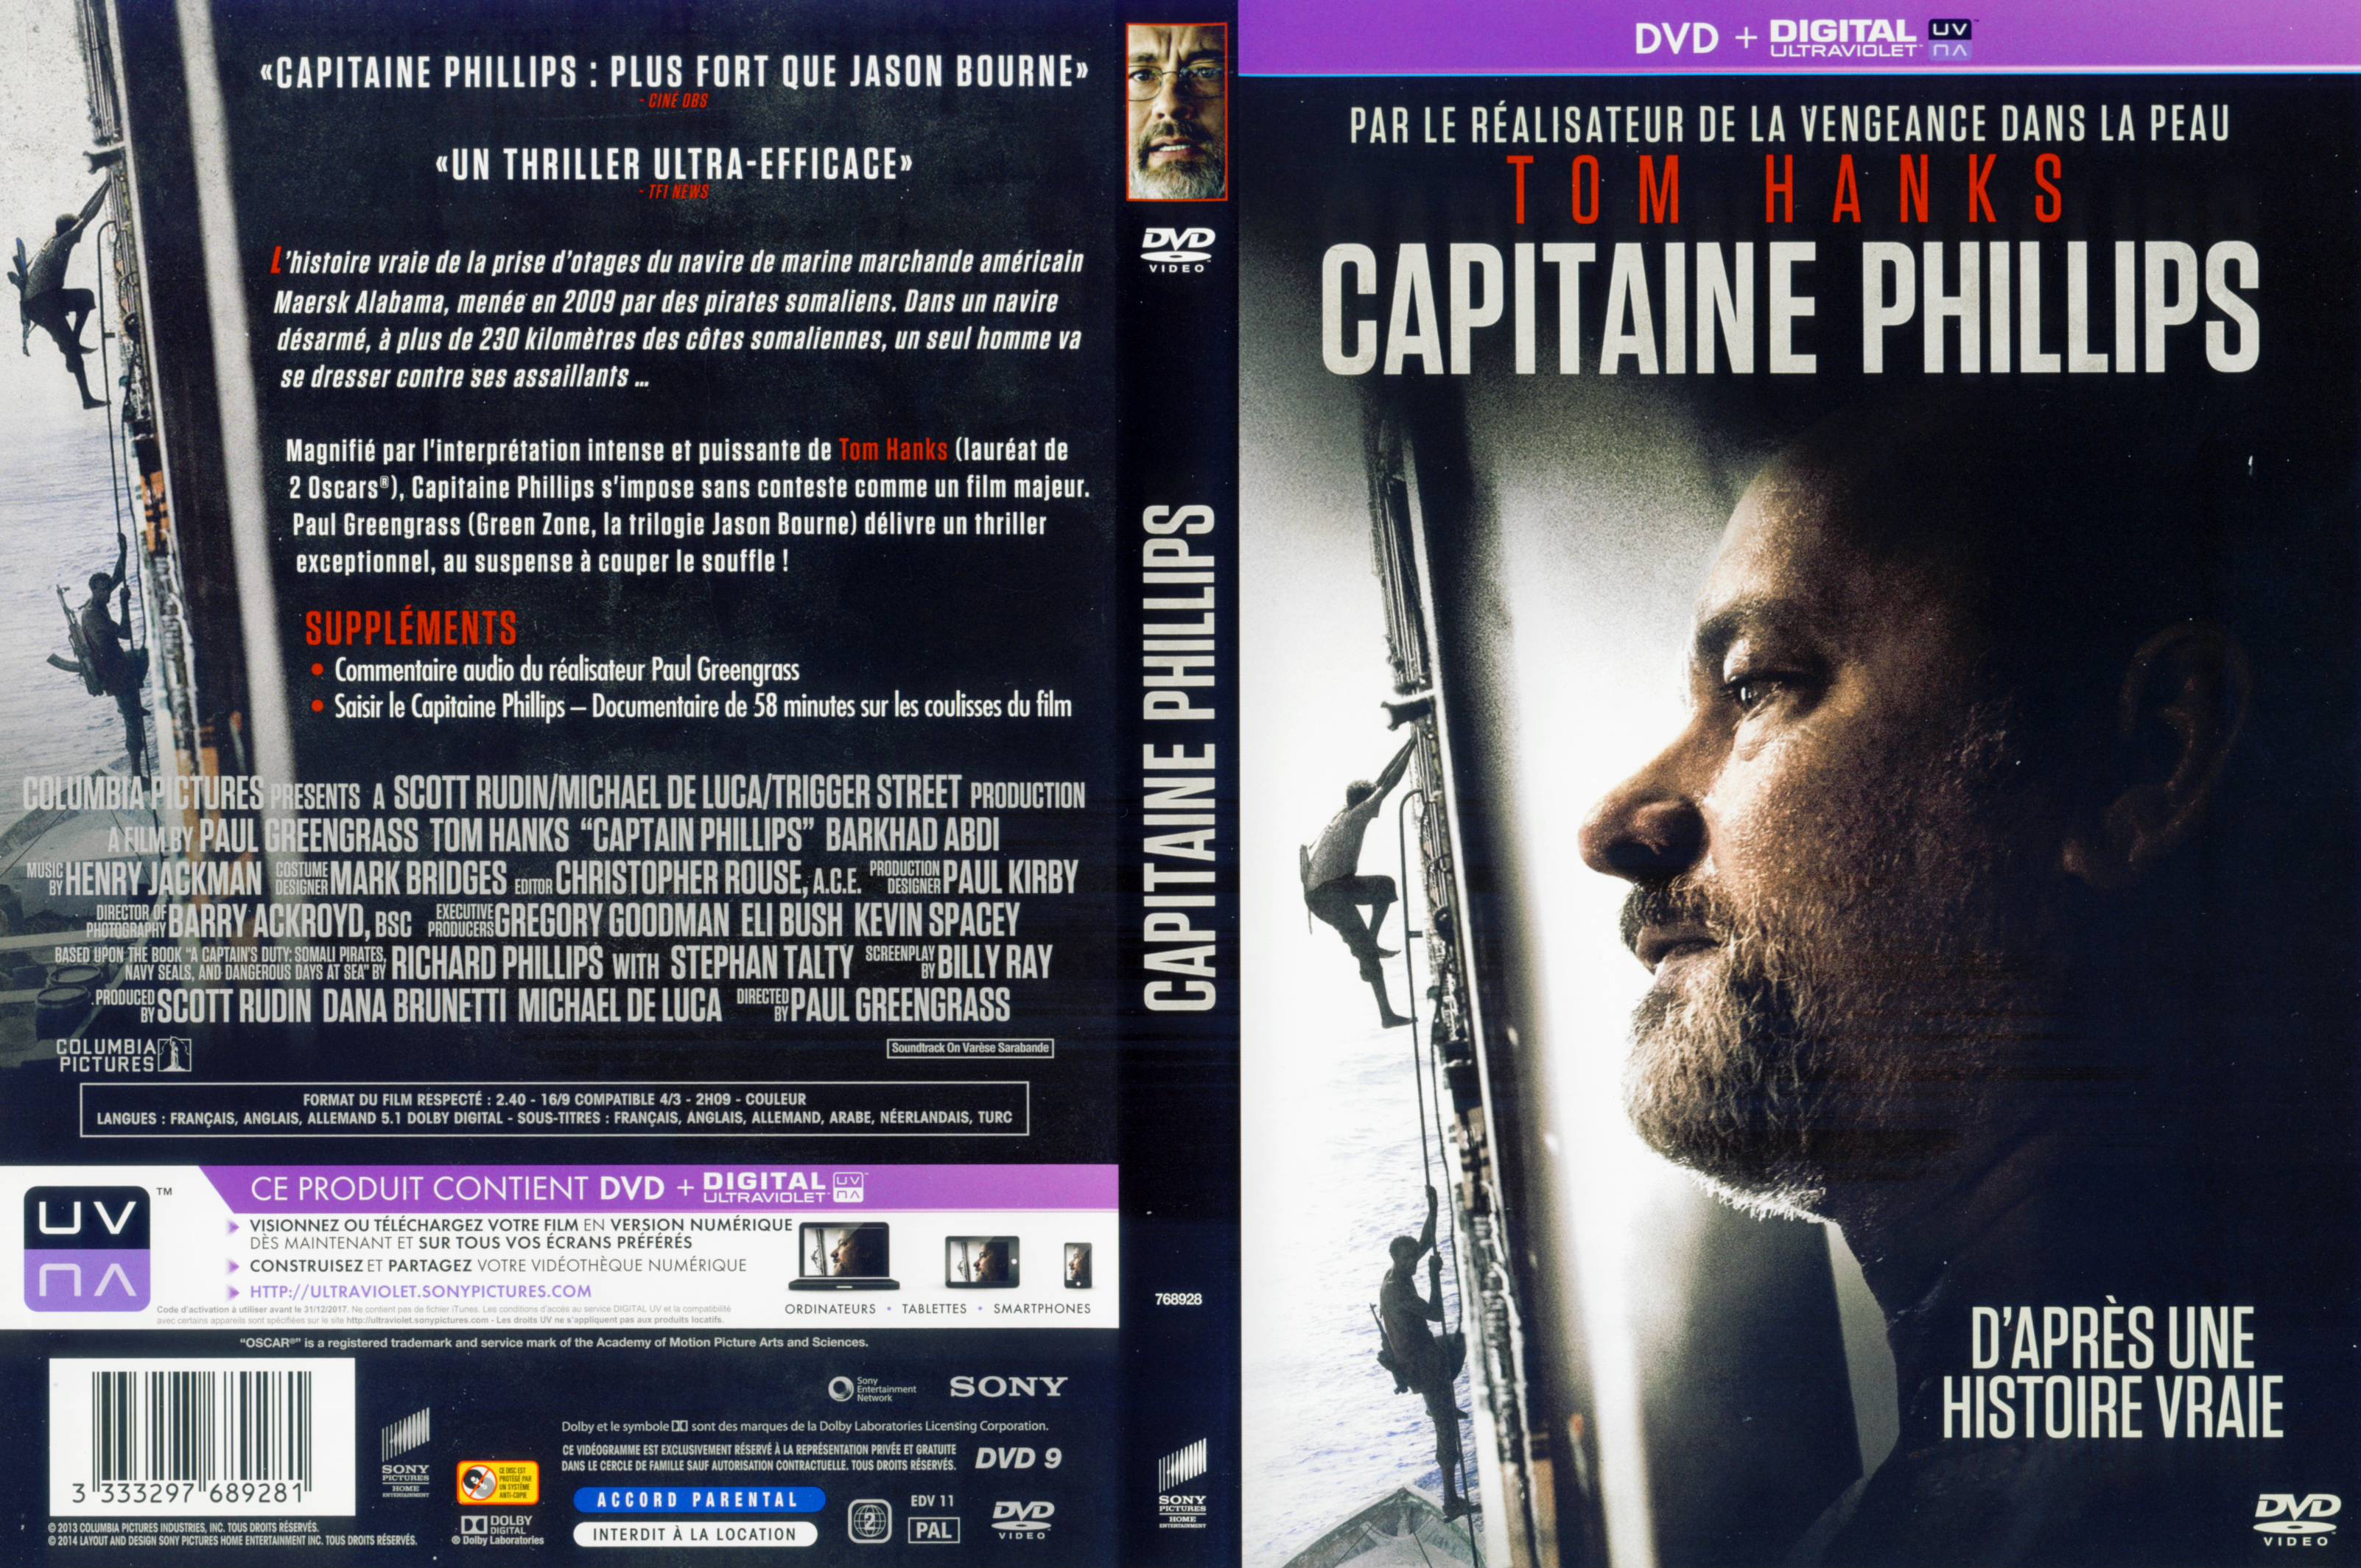 Jaquette DVD Capitaine Phillips